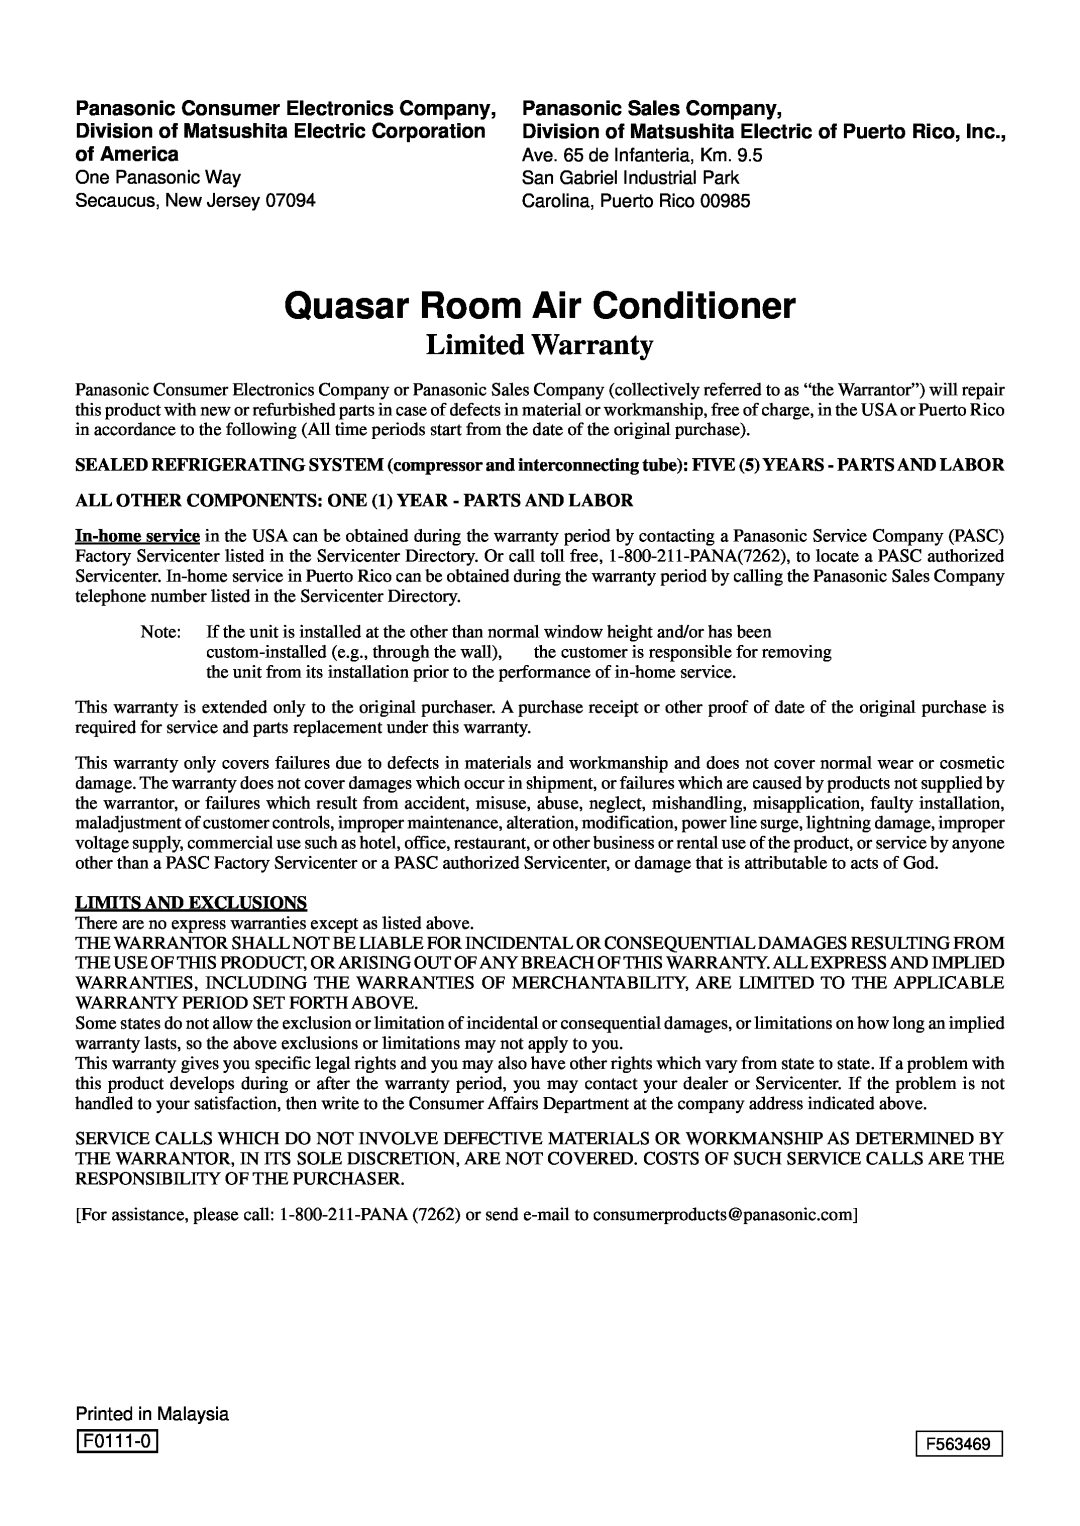 Panasonic HQ-2201SH Quasar Room Air Conditioner, Limited Warranty, Panasonic Consumer Electronics Company, of America 